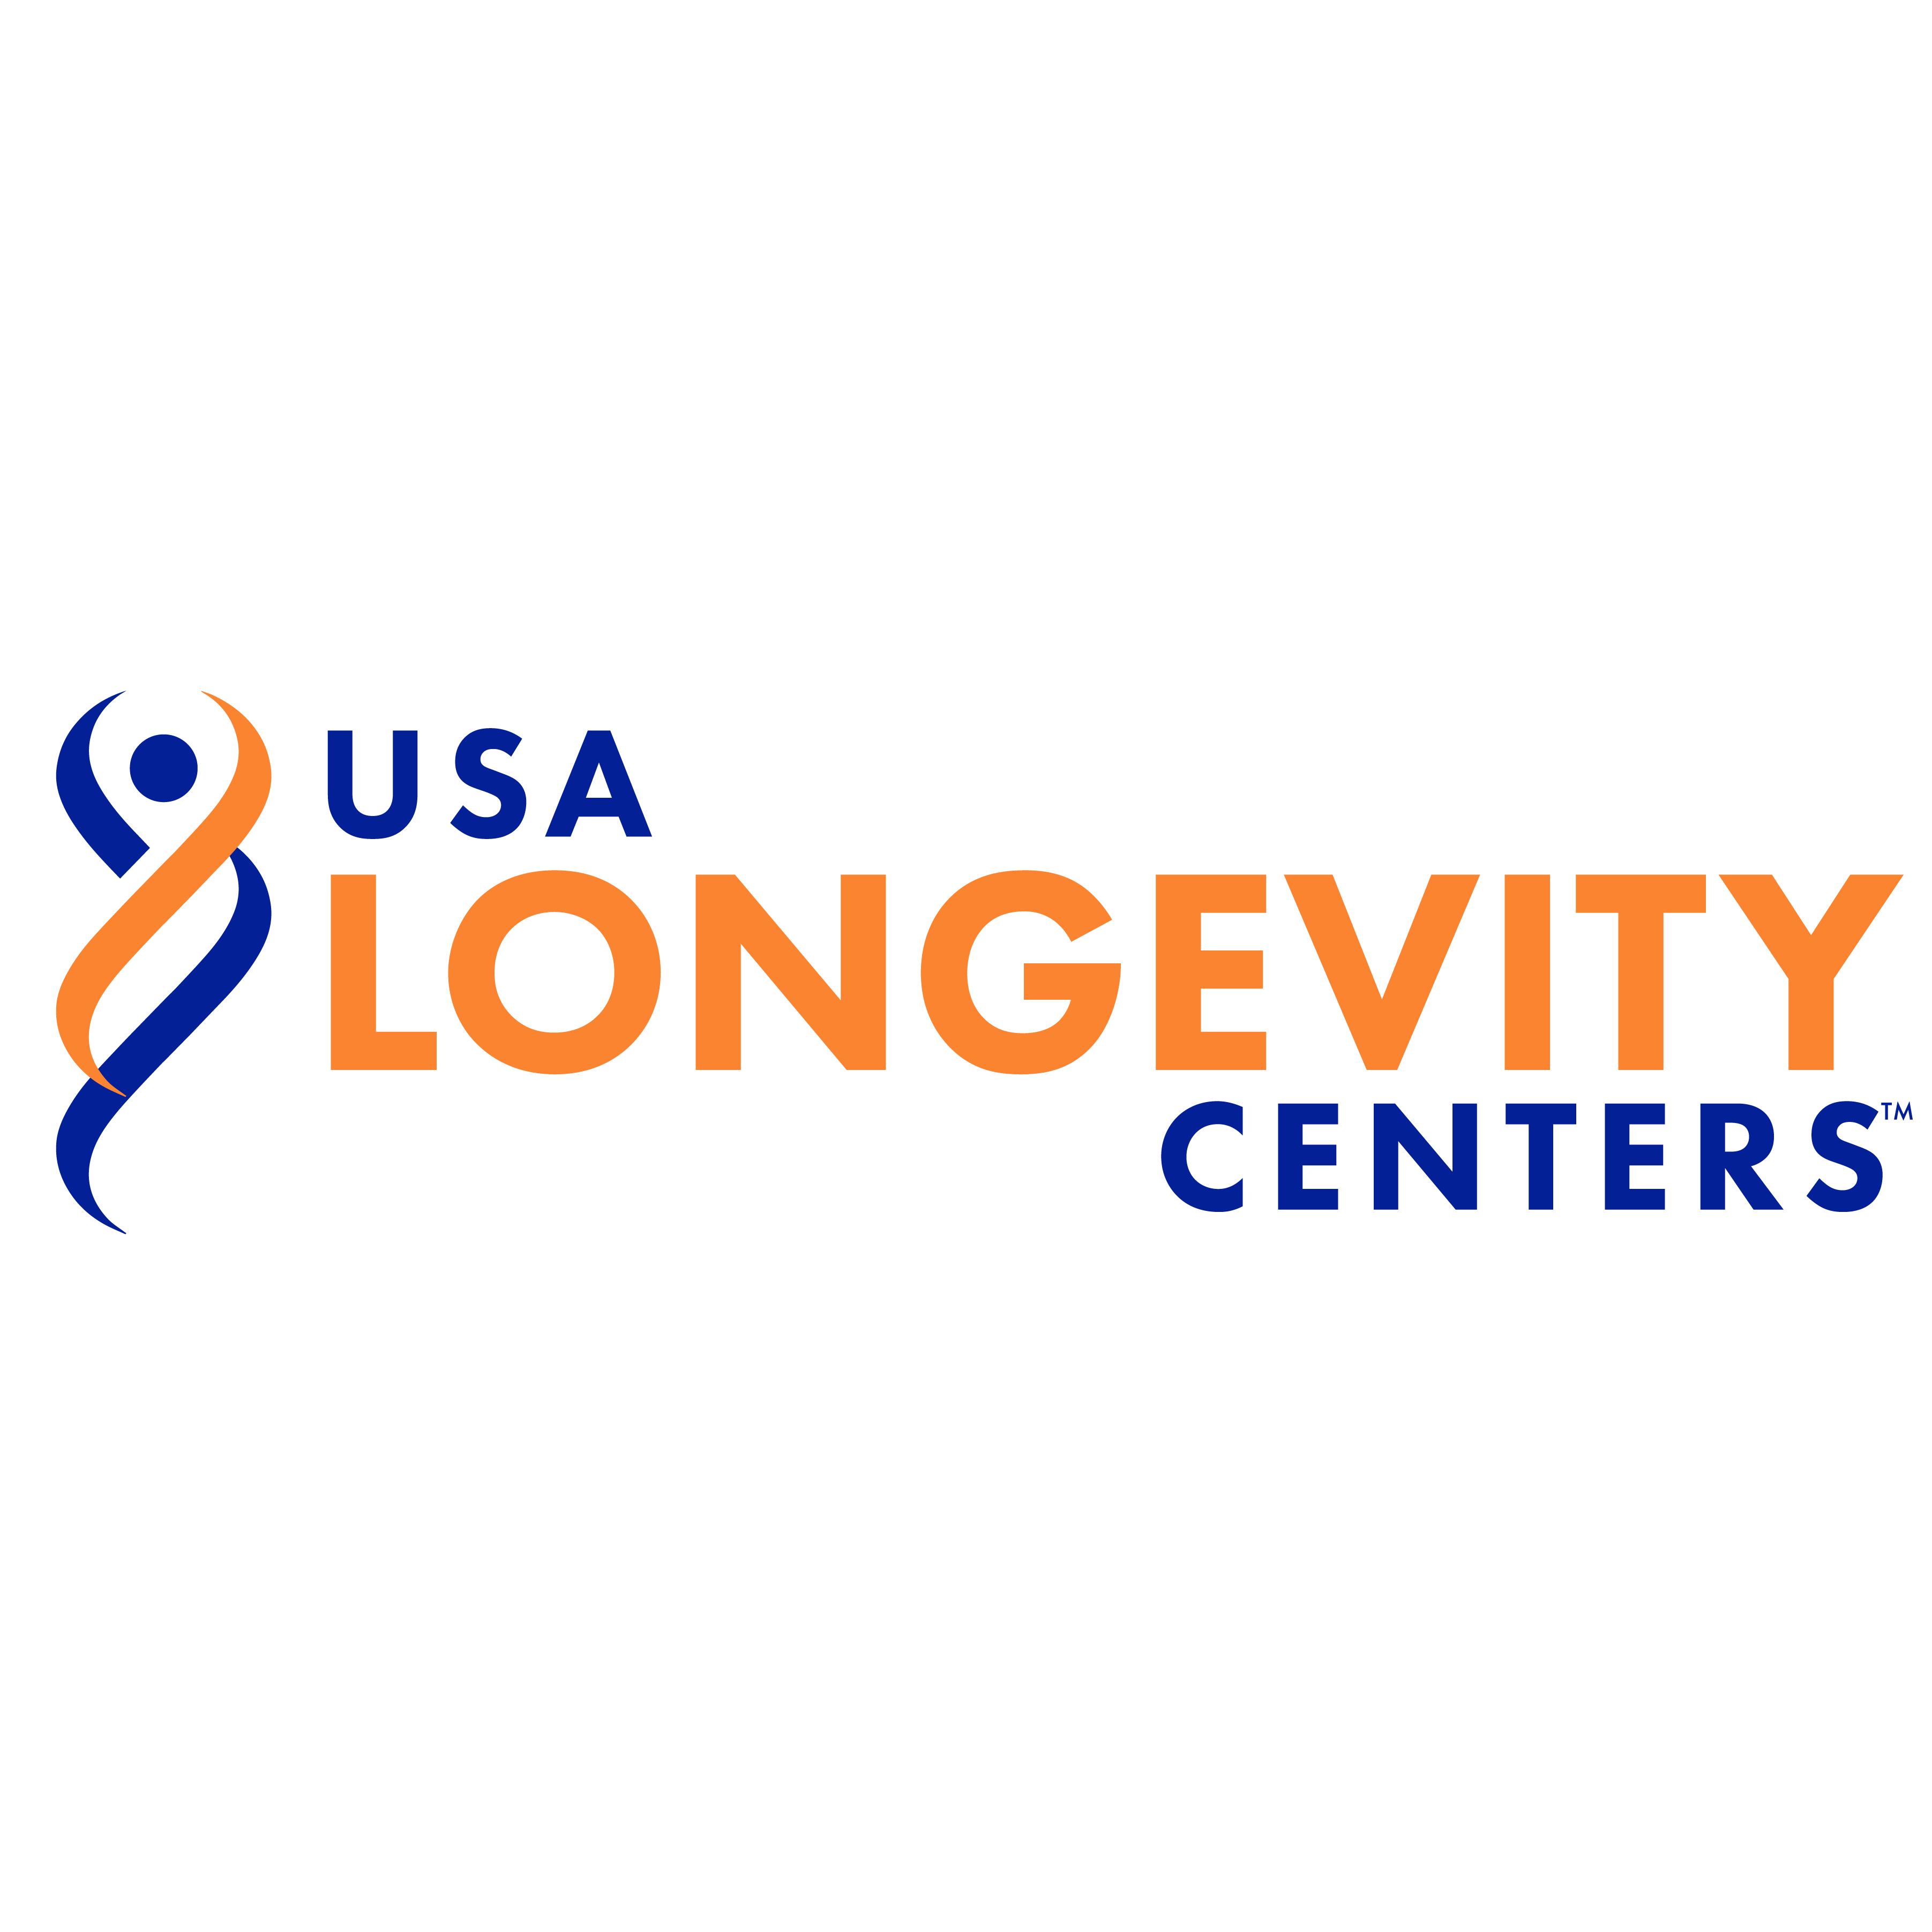 USA Longevity Centers